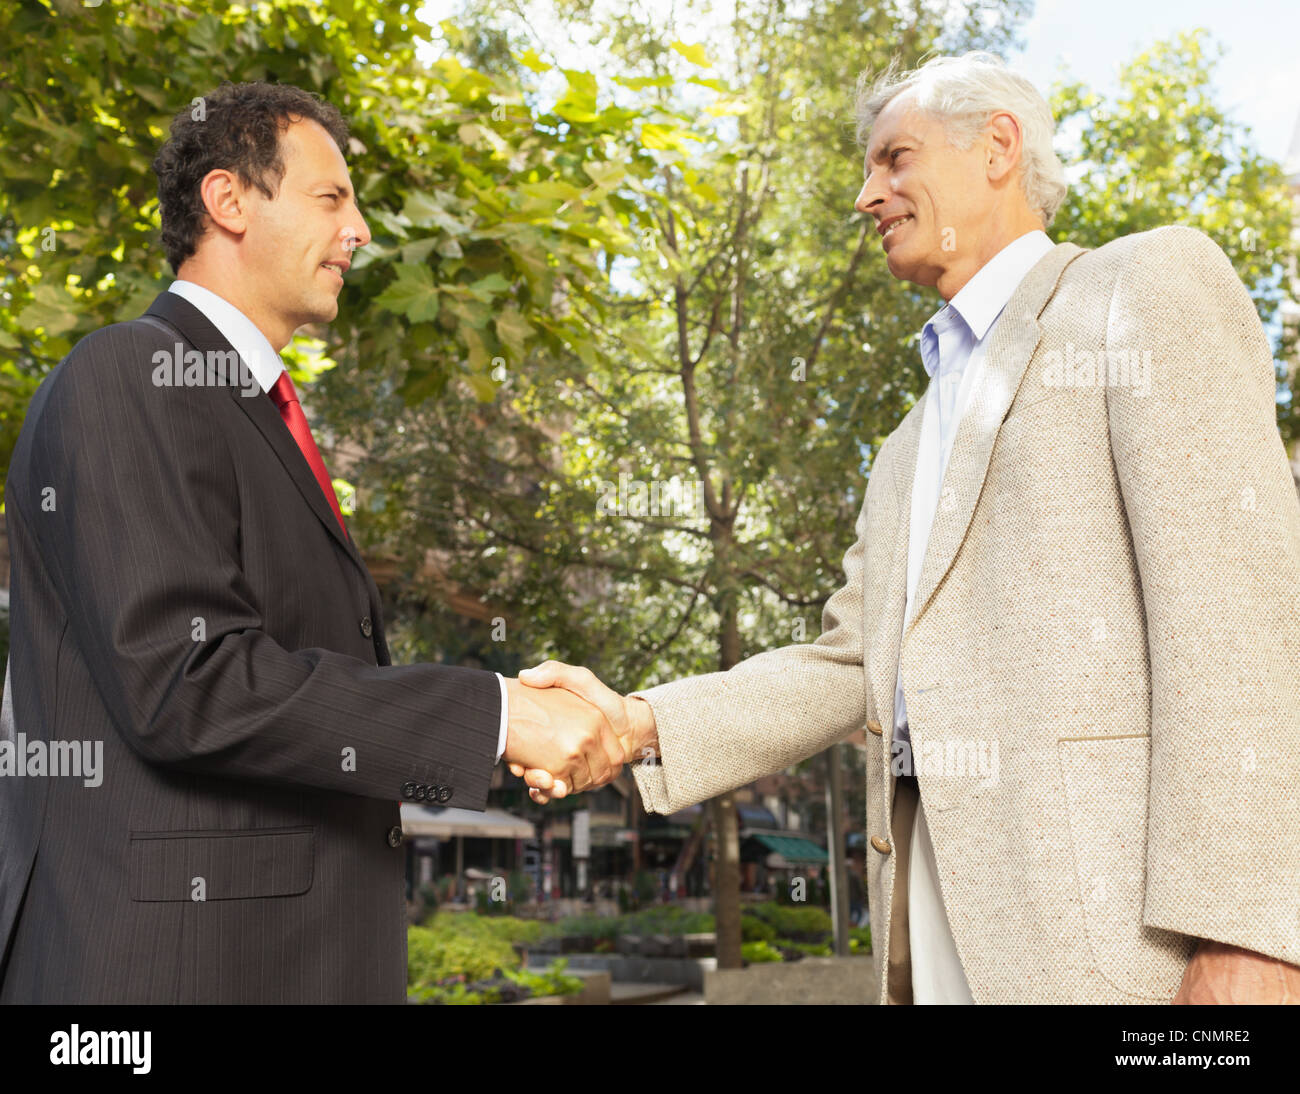 Businessmen shaking hands outdoors Banque D'Images